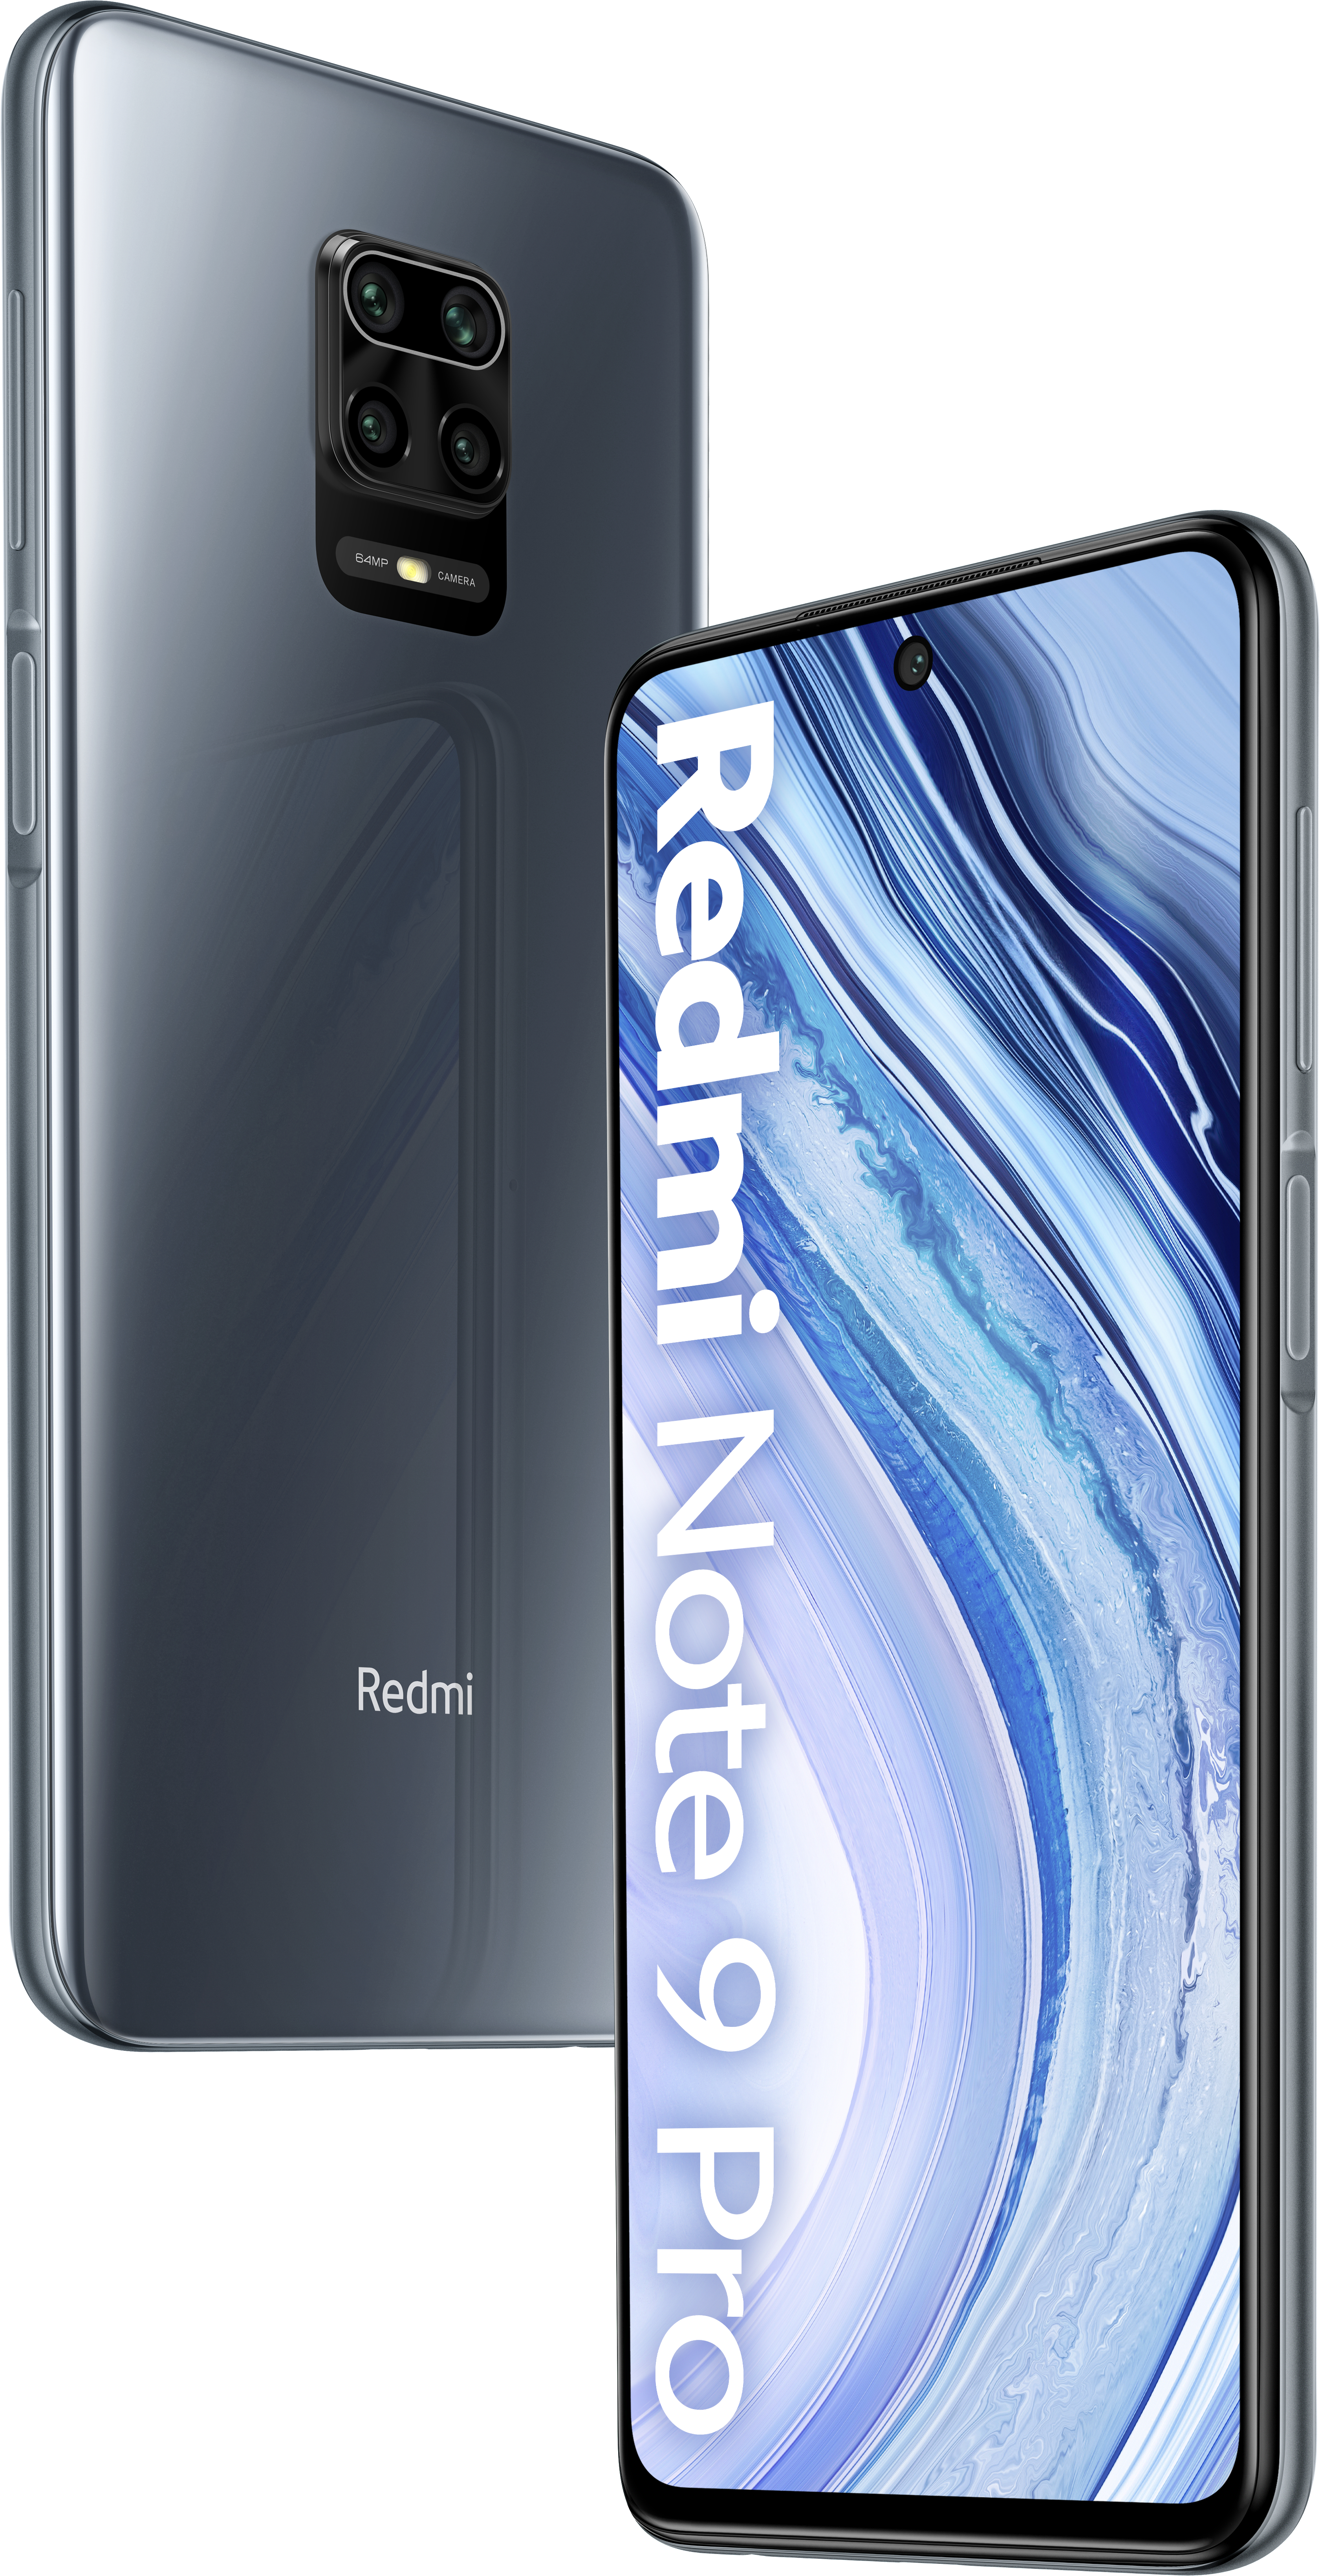 XIAOMI Redmi Note 9 Pro GB 128 Dual SIM Interstellar Grey